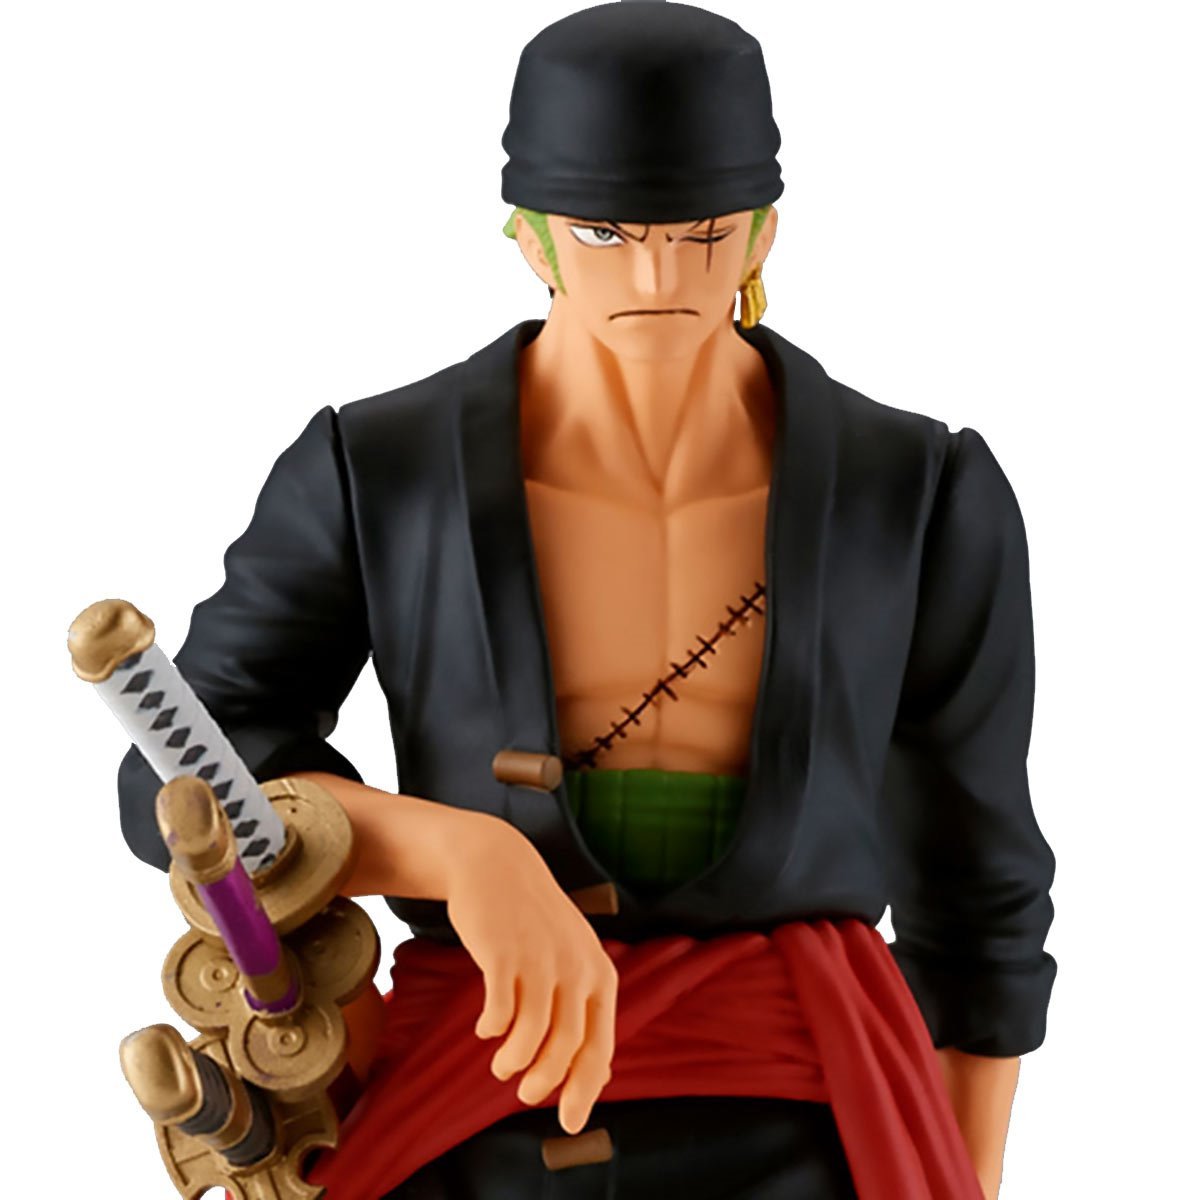 Banpresto Anime One Piece Figurine Luffy Zephyr Action Figure